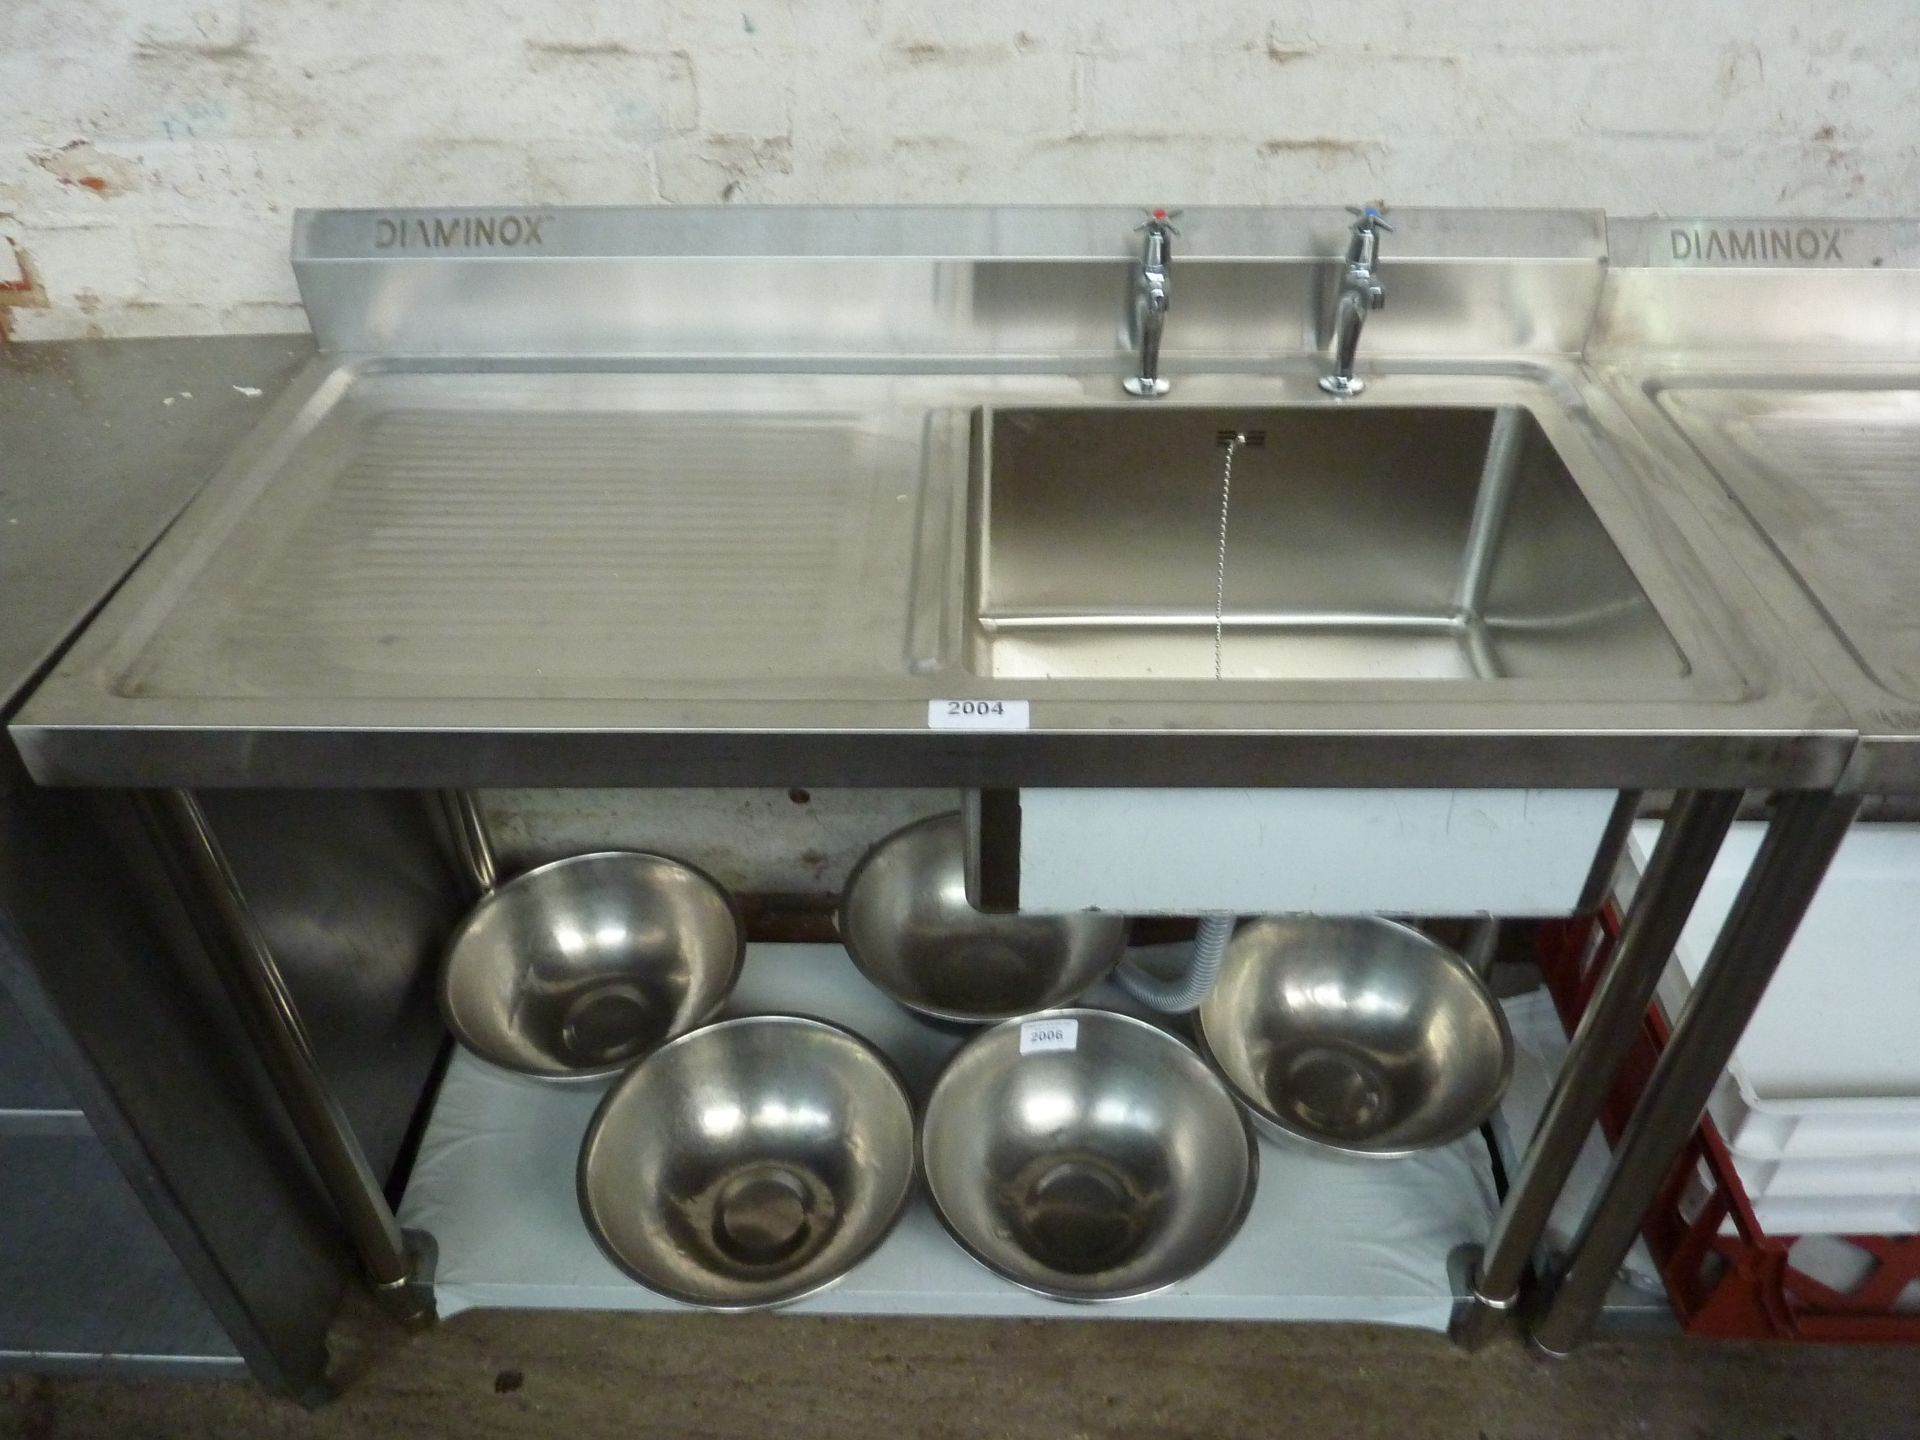 Diaminox single bowl, single drainer sink